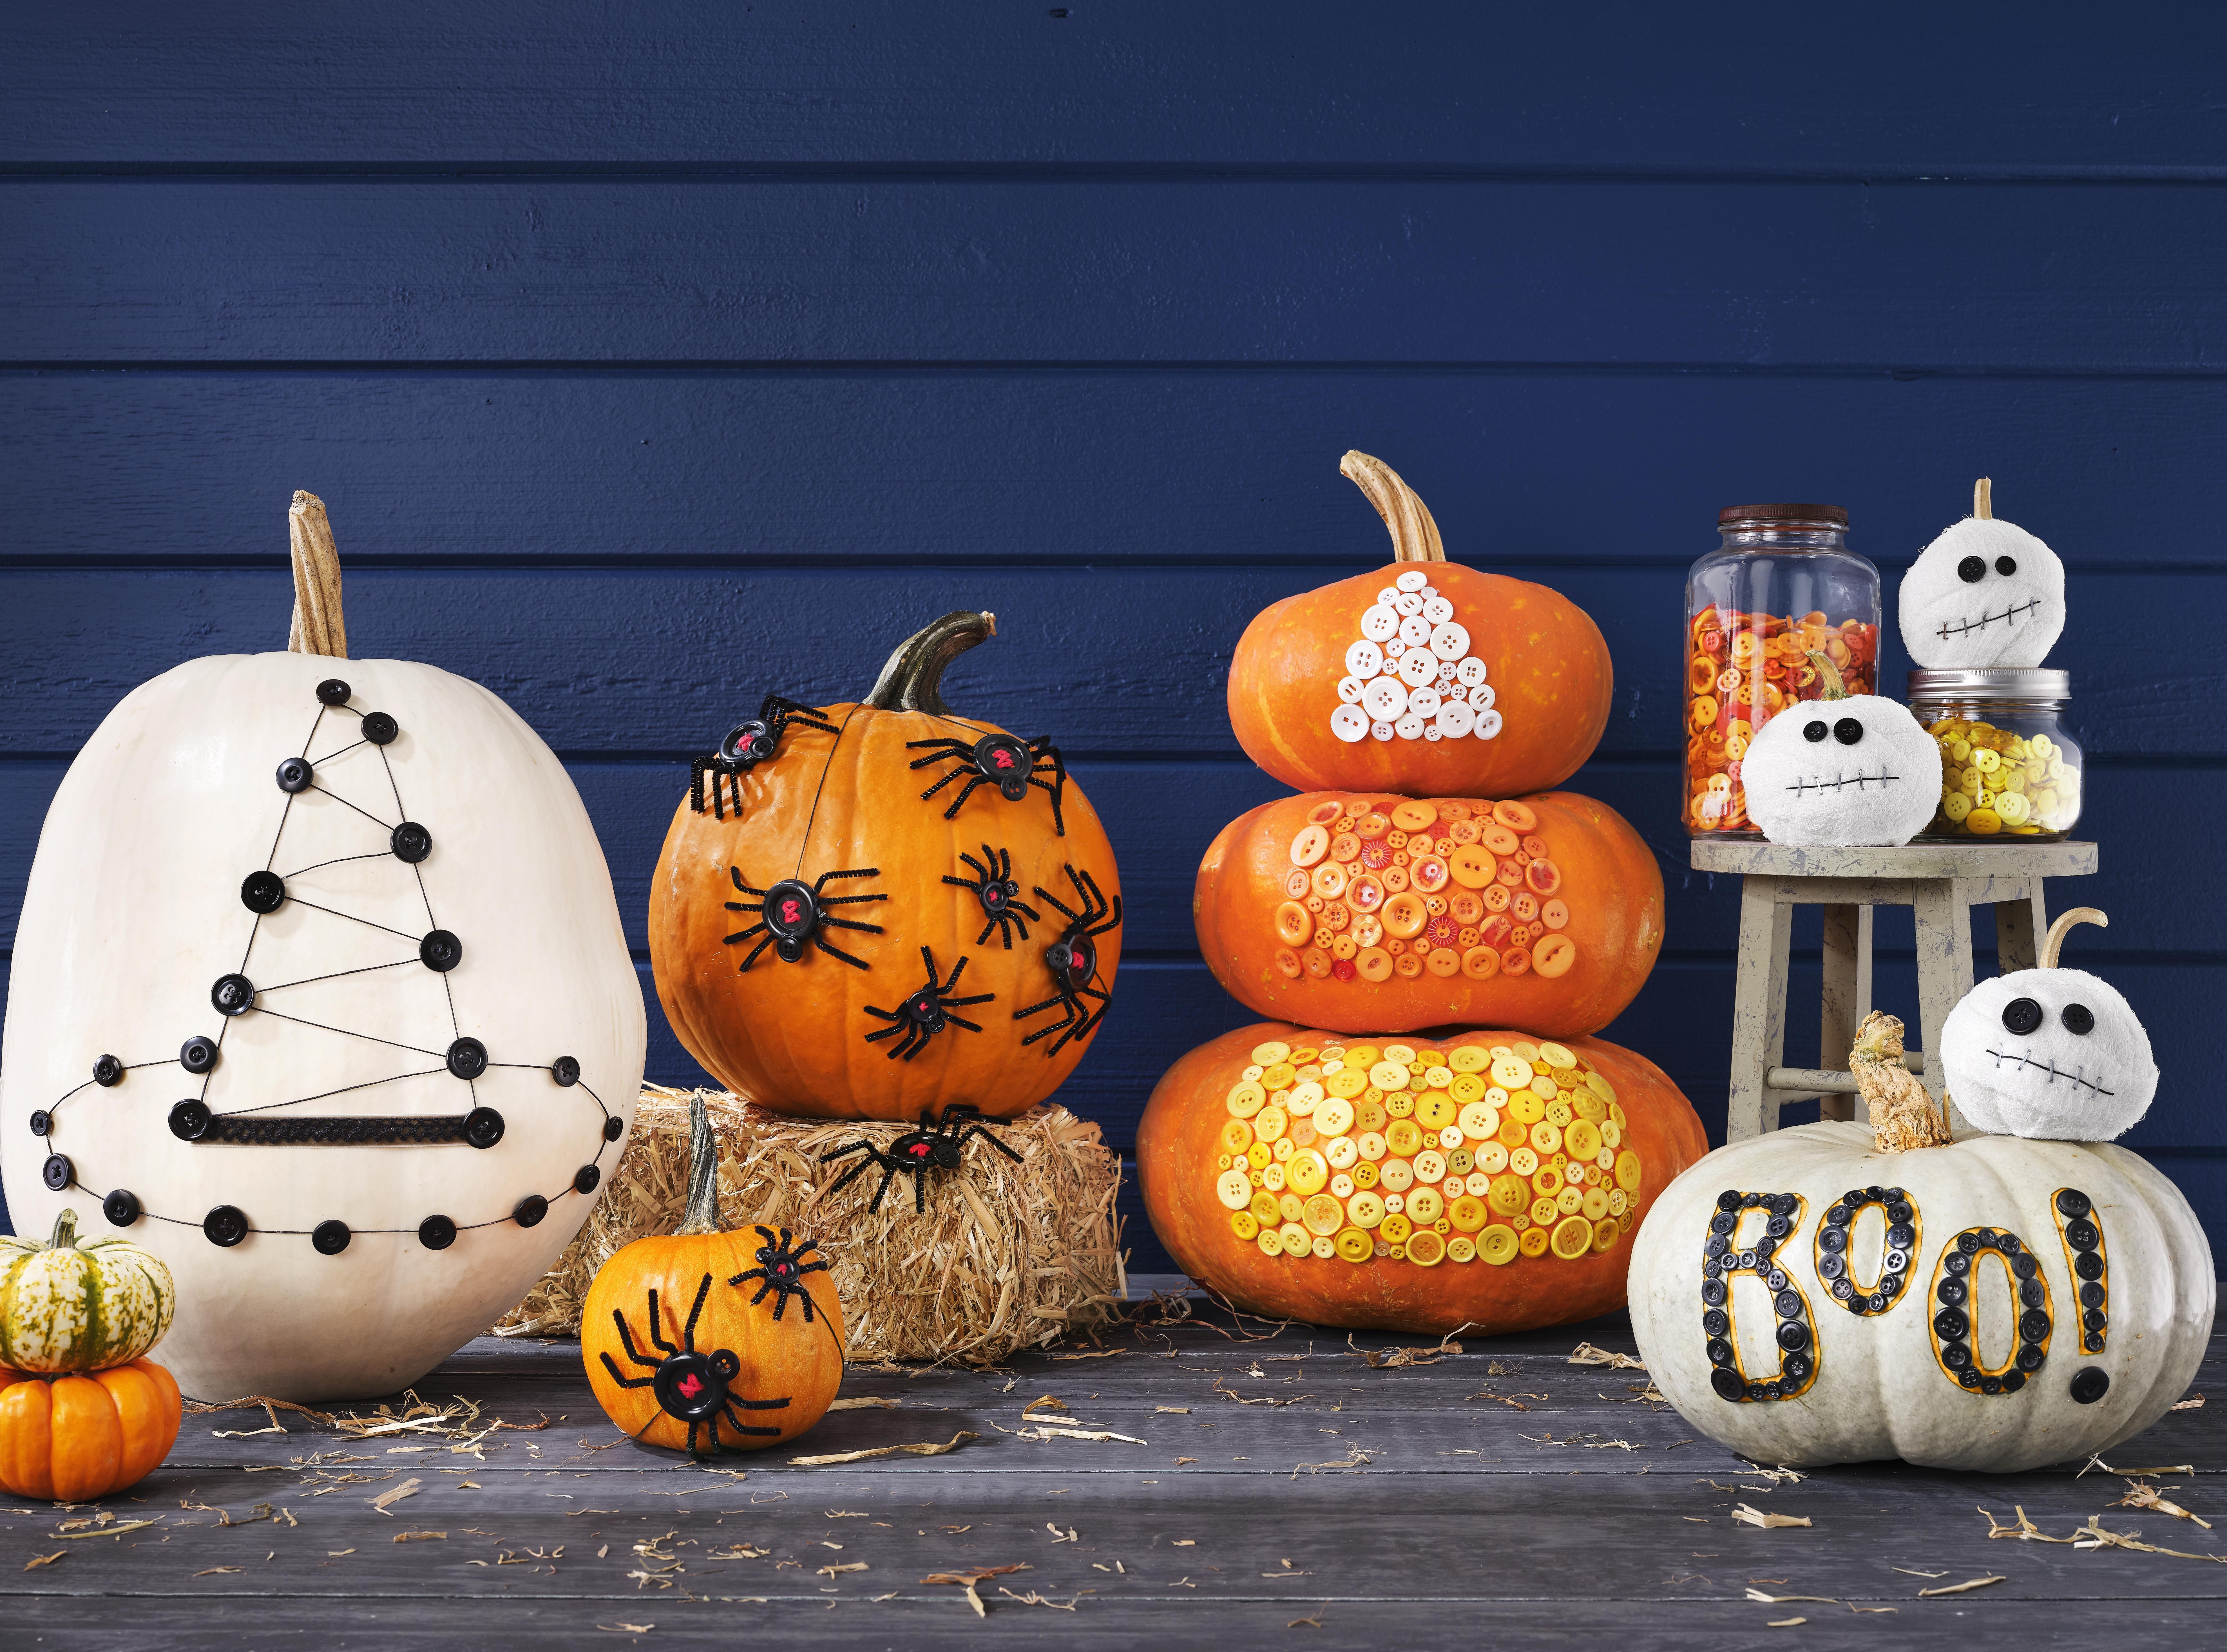 100+ creative pumpkin decorating ideas - easy halloween pumpkin